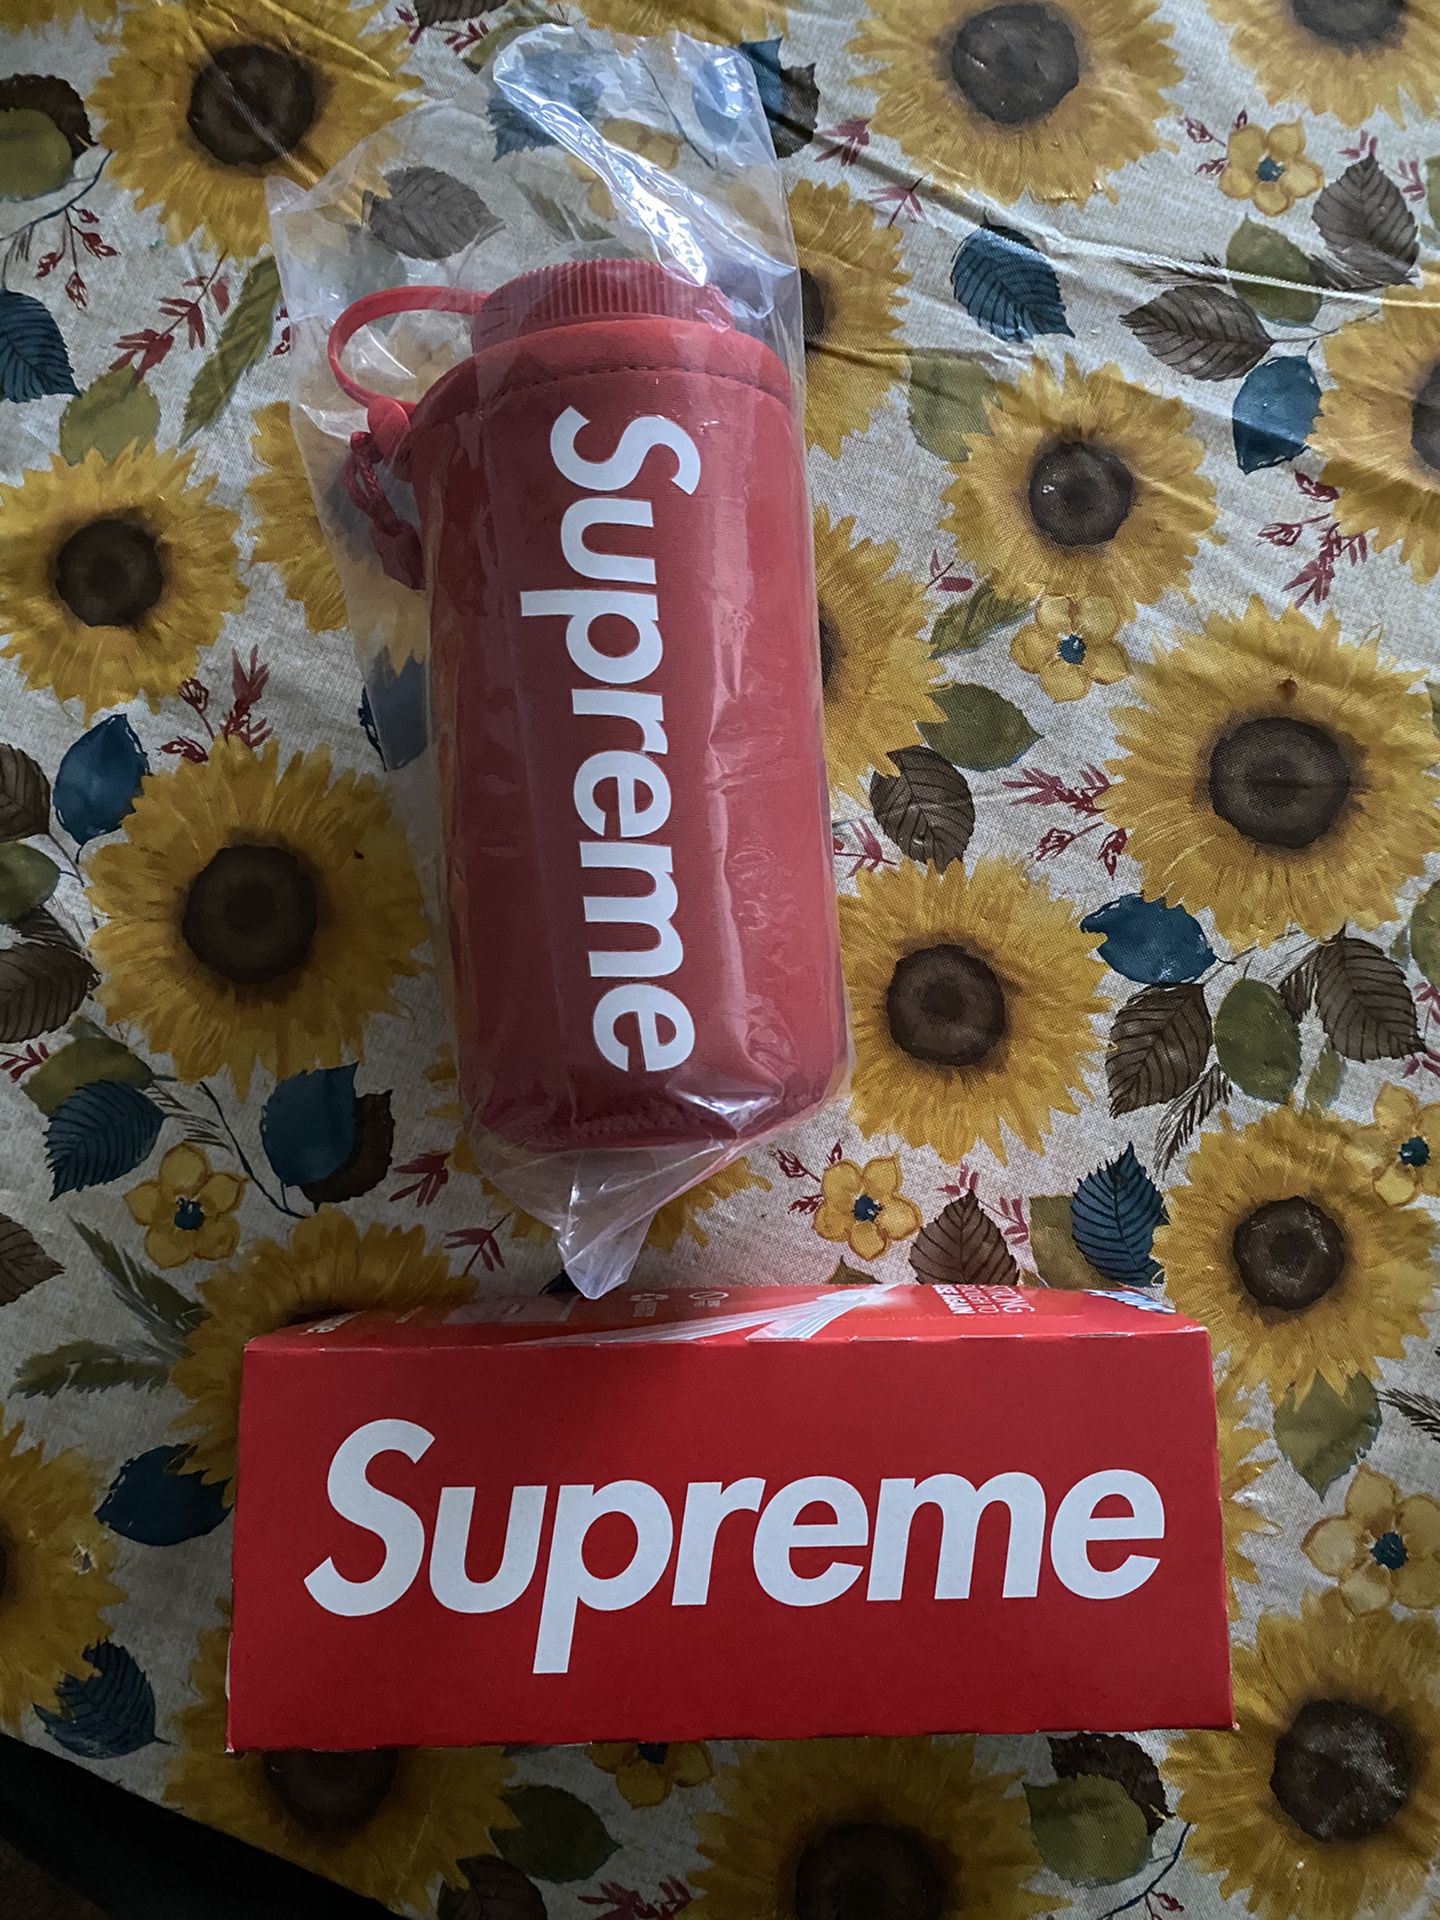 Supreme Nalgene 32 oz. Red Bottle & Supreme ziploc bag pack